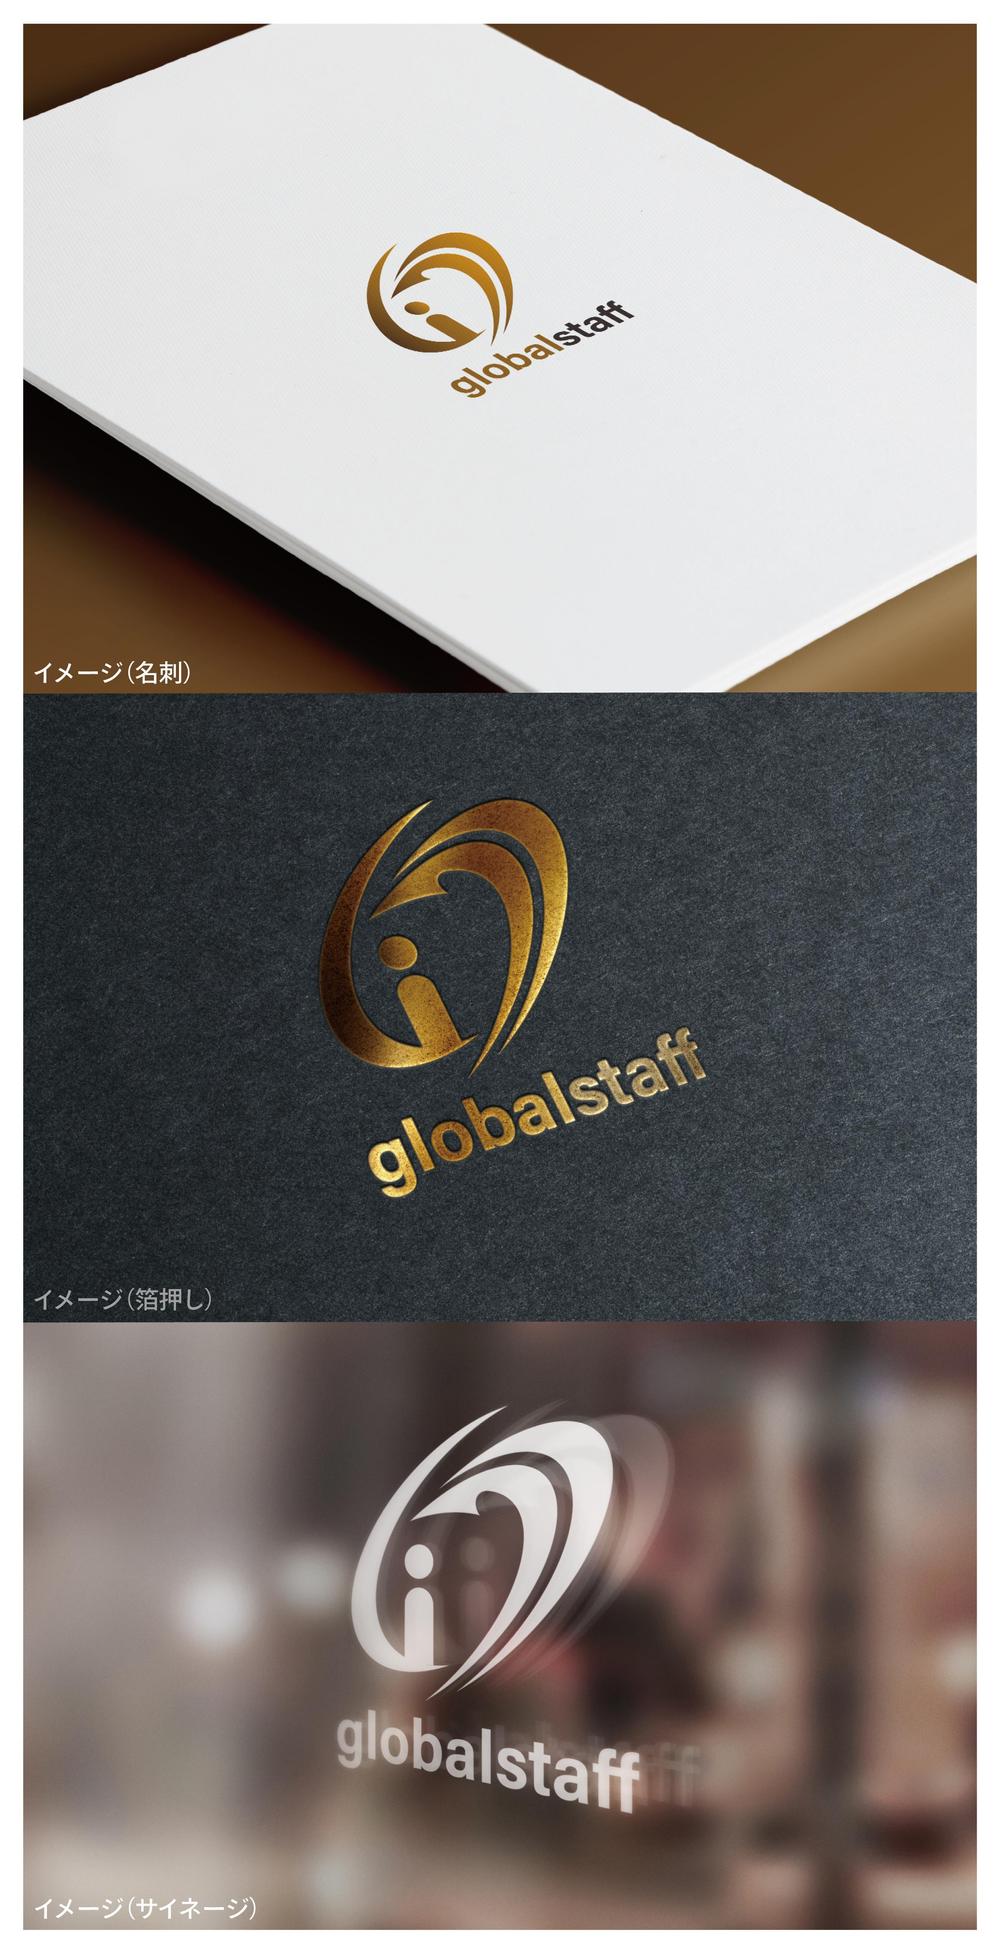 globalstaff_logo02_01.jpg